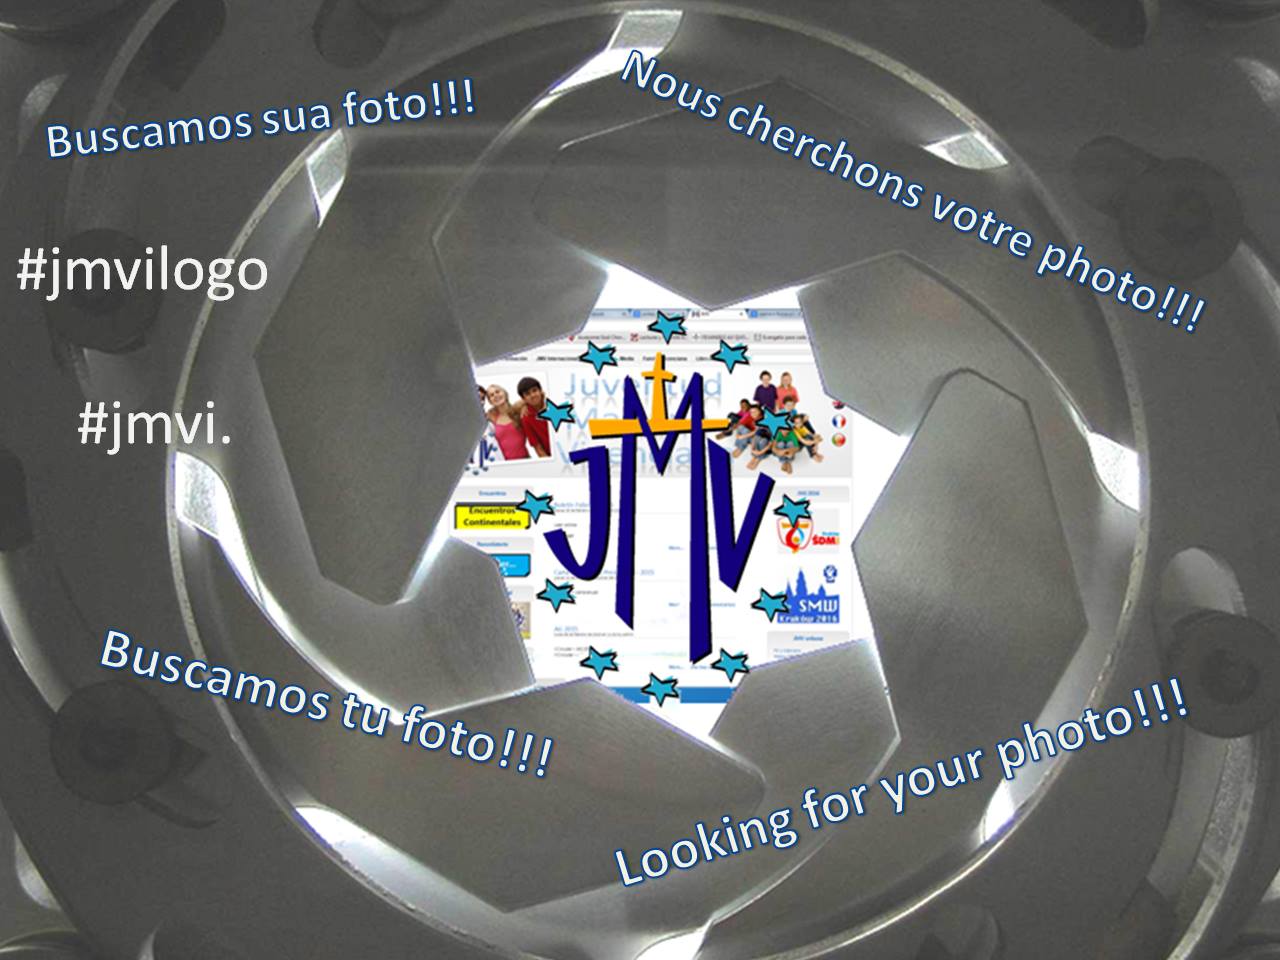 VMY (JMV) to renovate website design